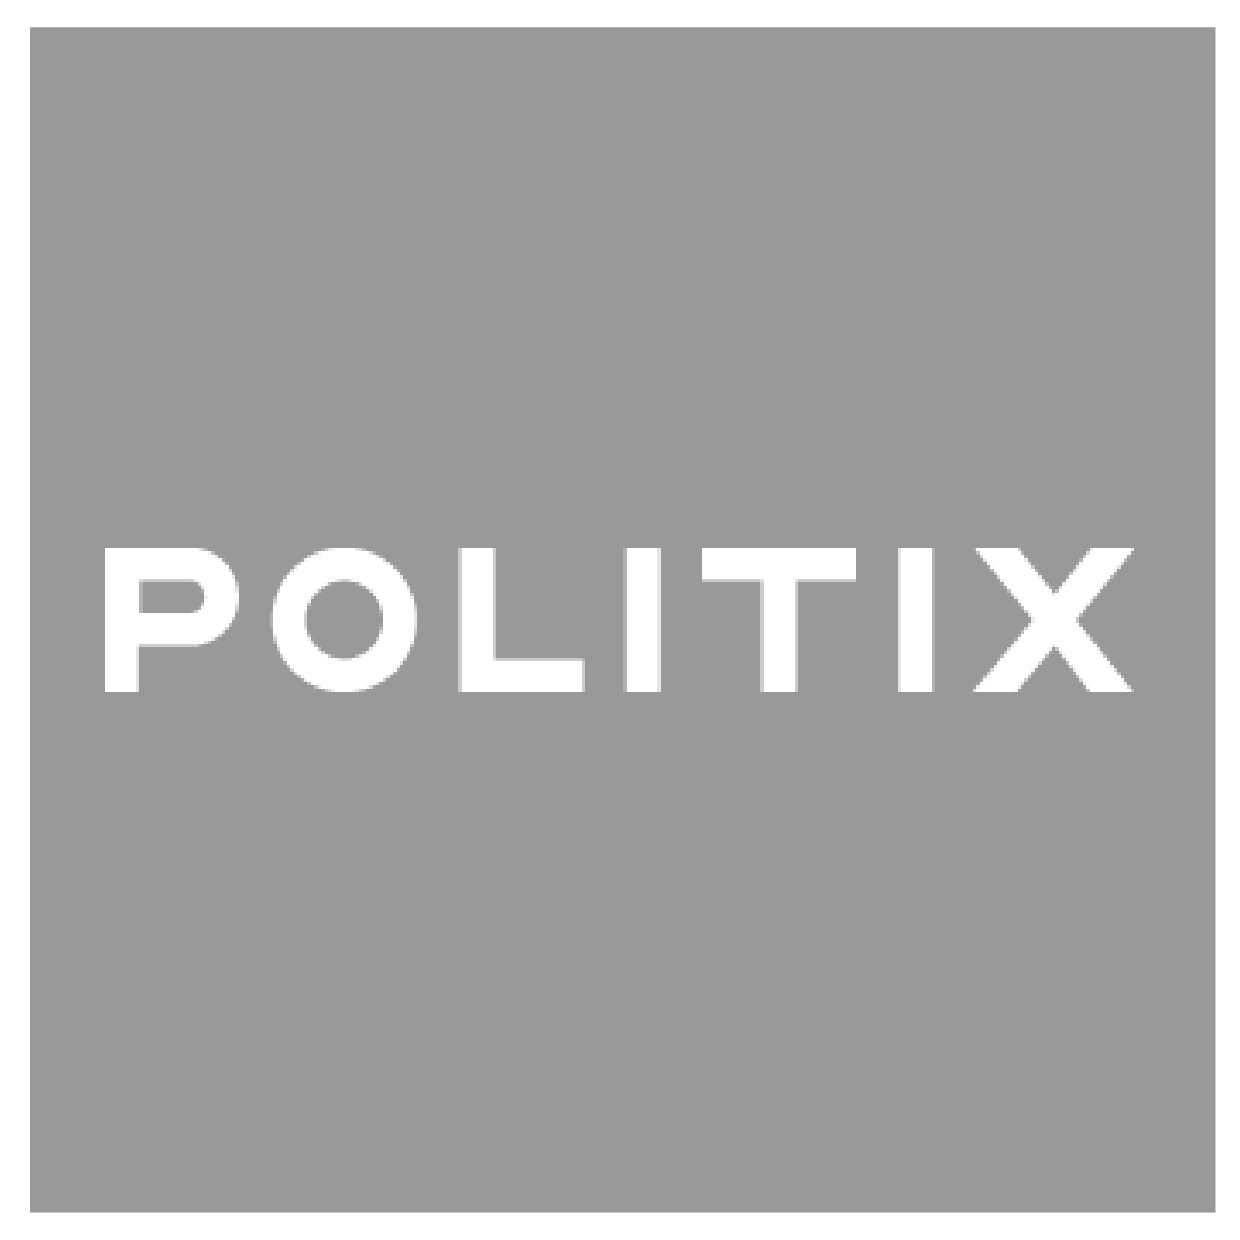 politix